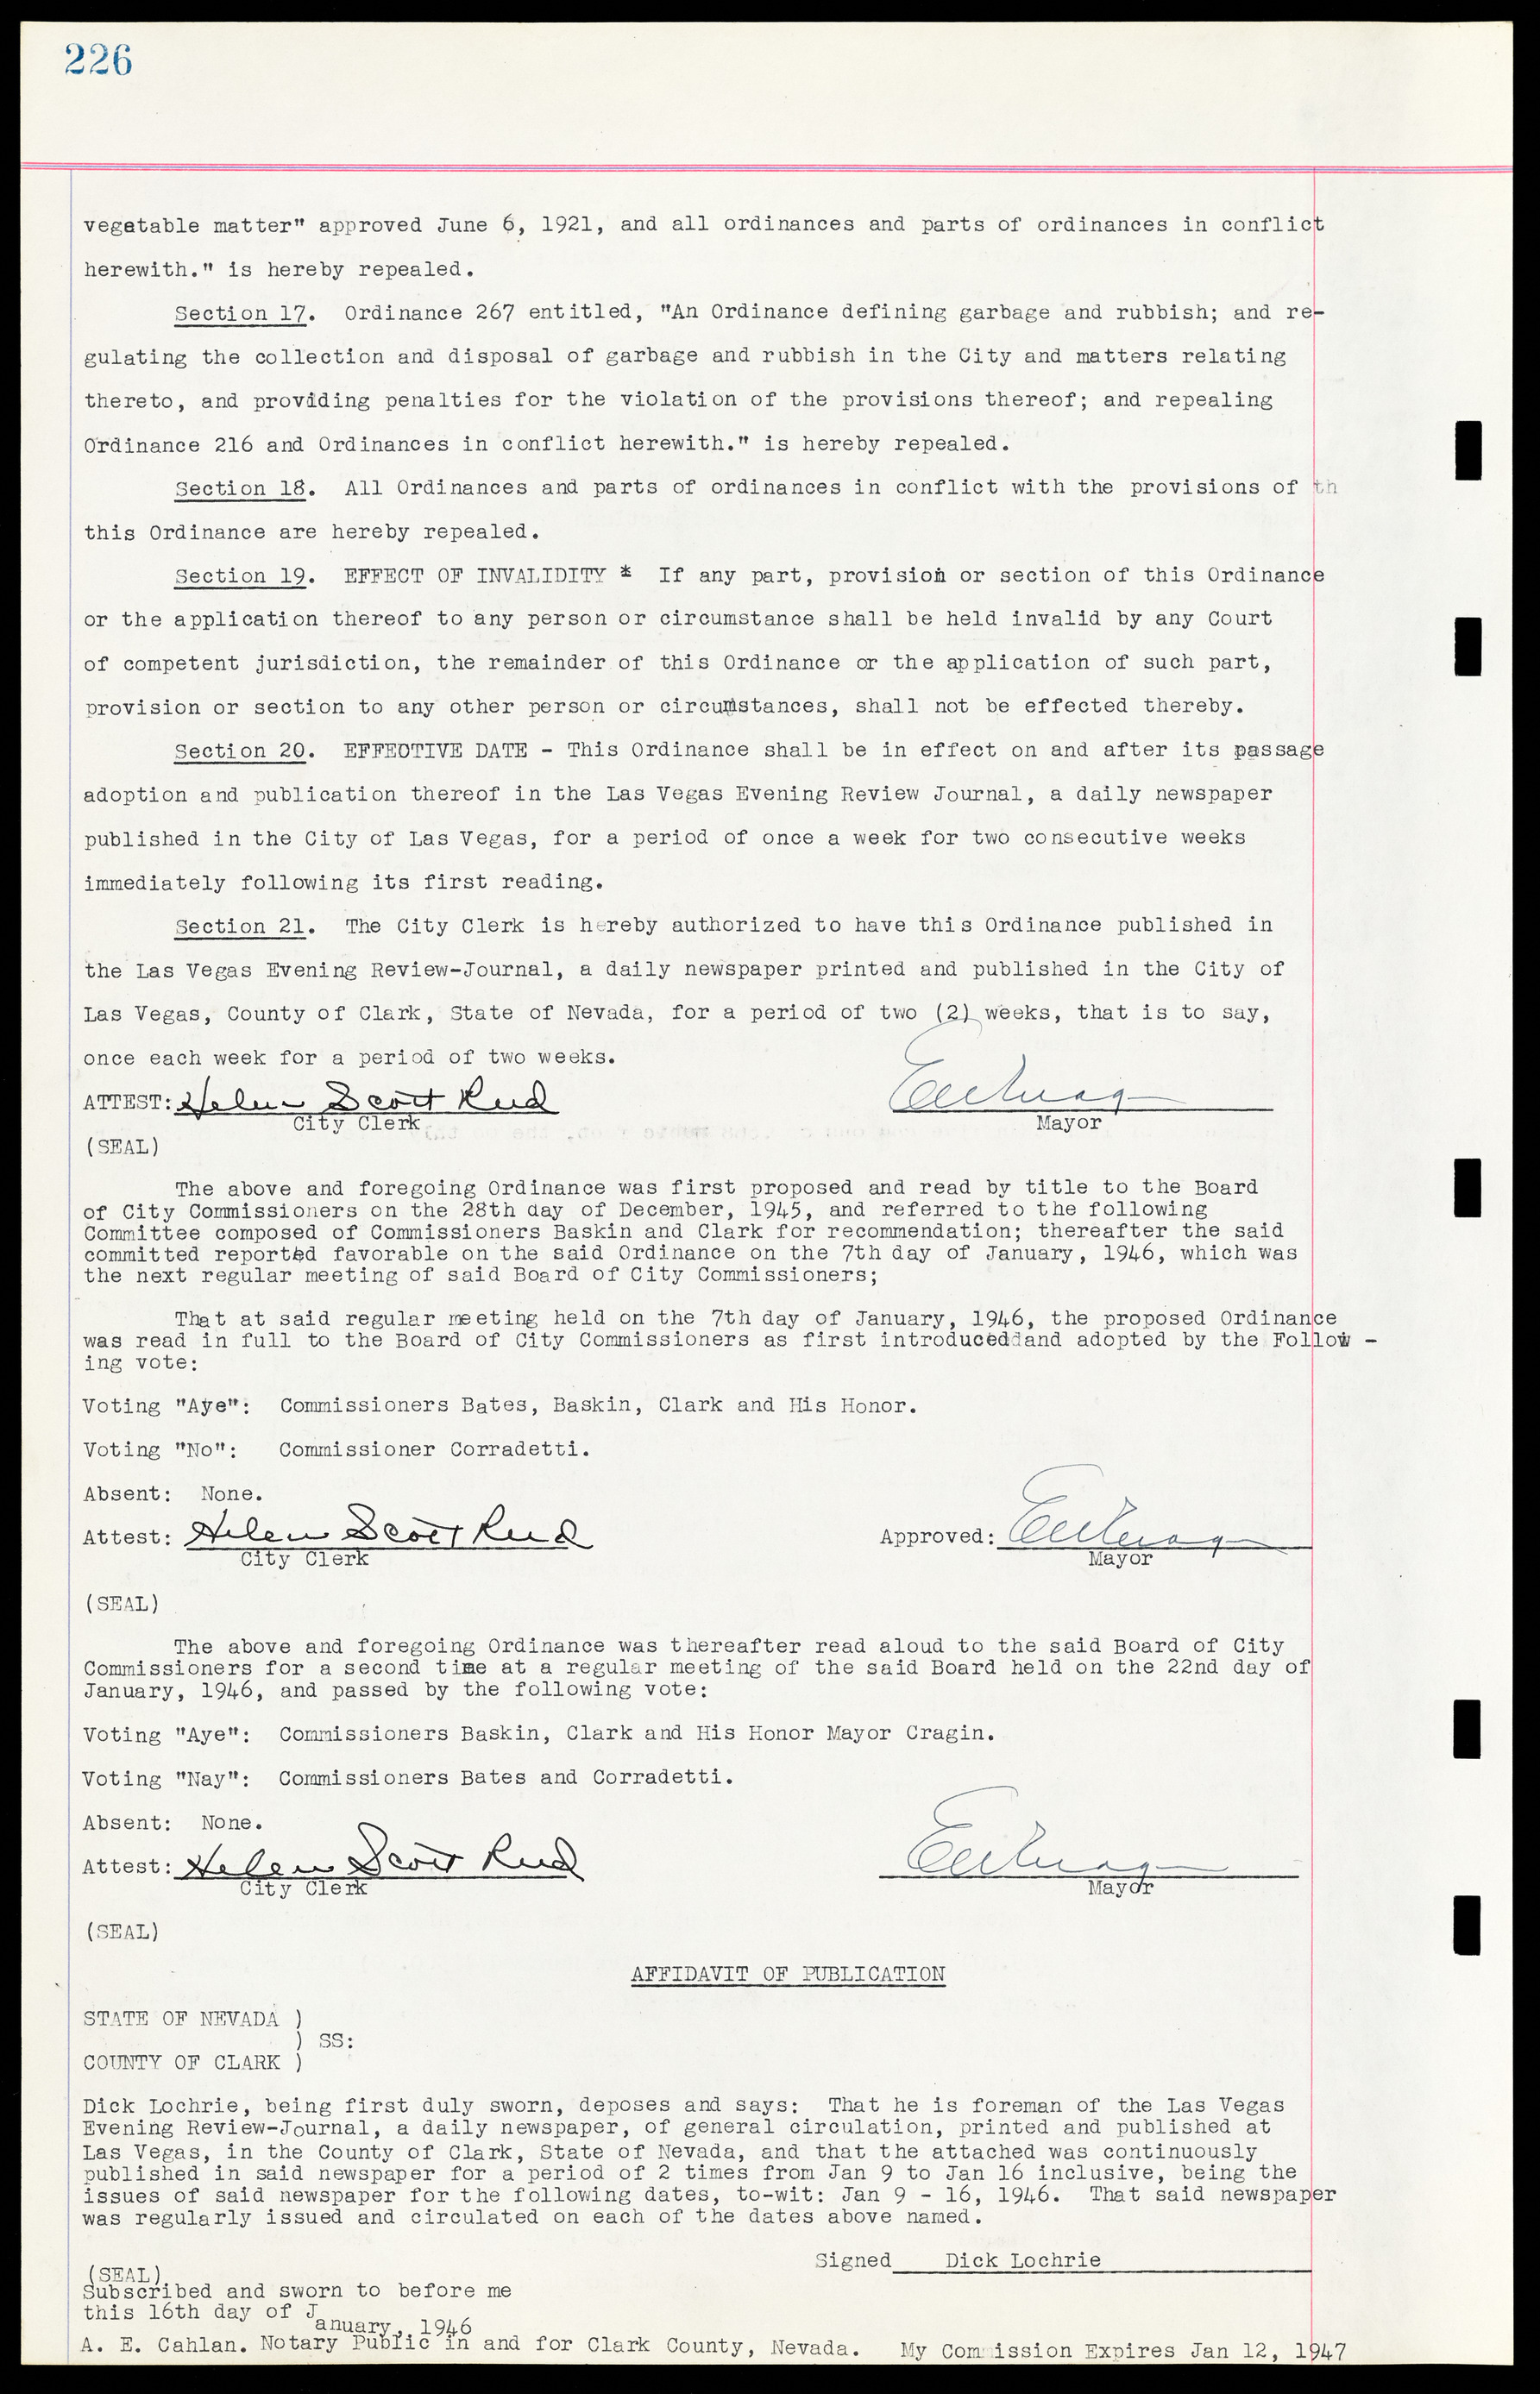 Las Vegas City Ordinances, March 31, 1933 to October 25, 1950, lvc000014-255